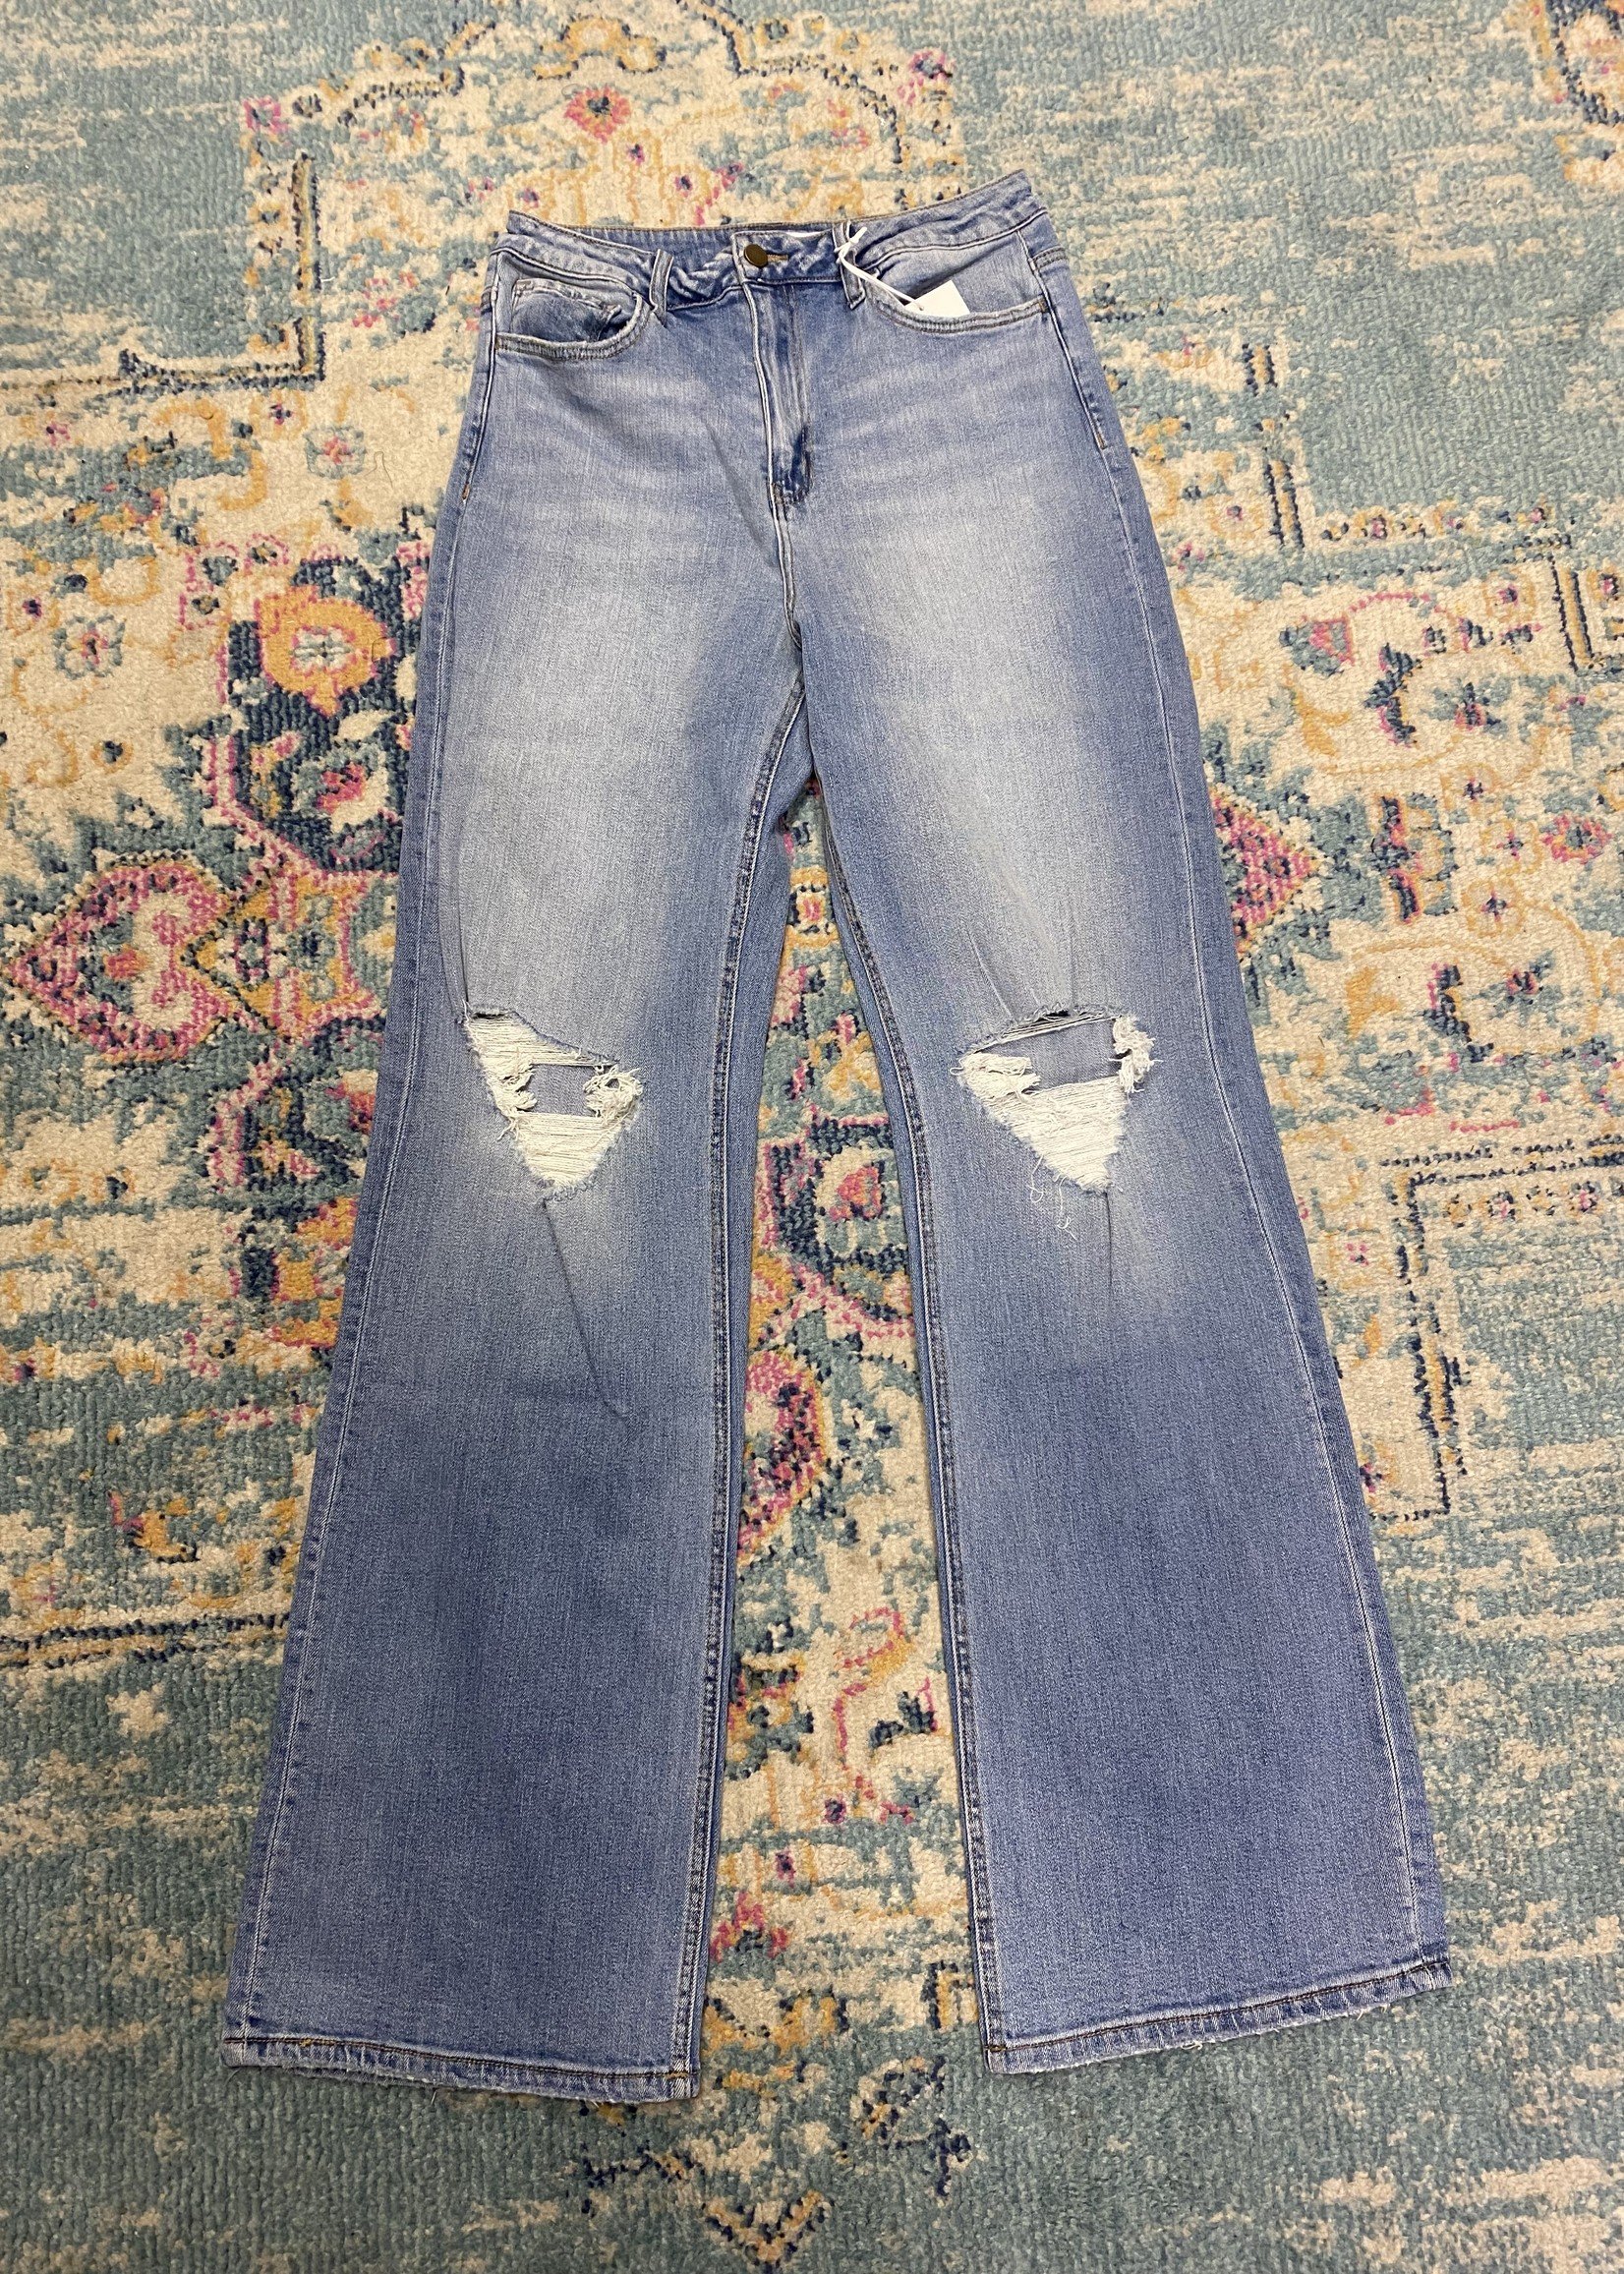 Flying Monkey Blue Rain 90’s Vintage Flare Jeans